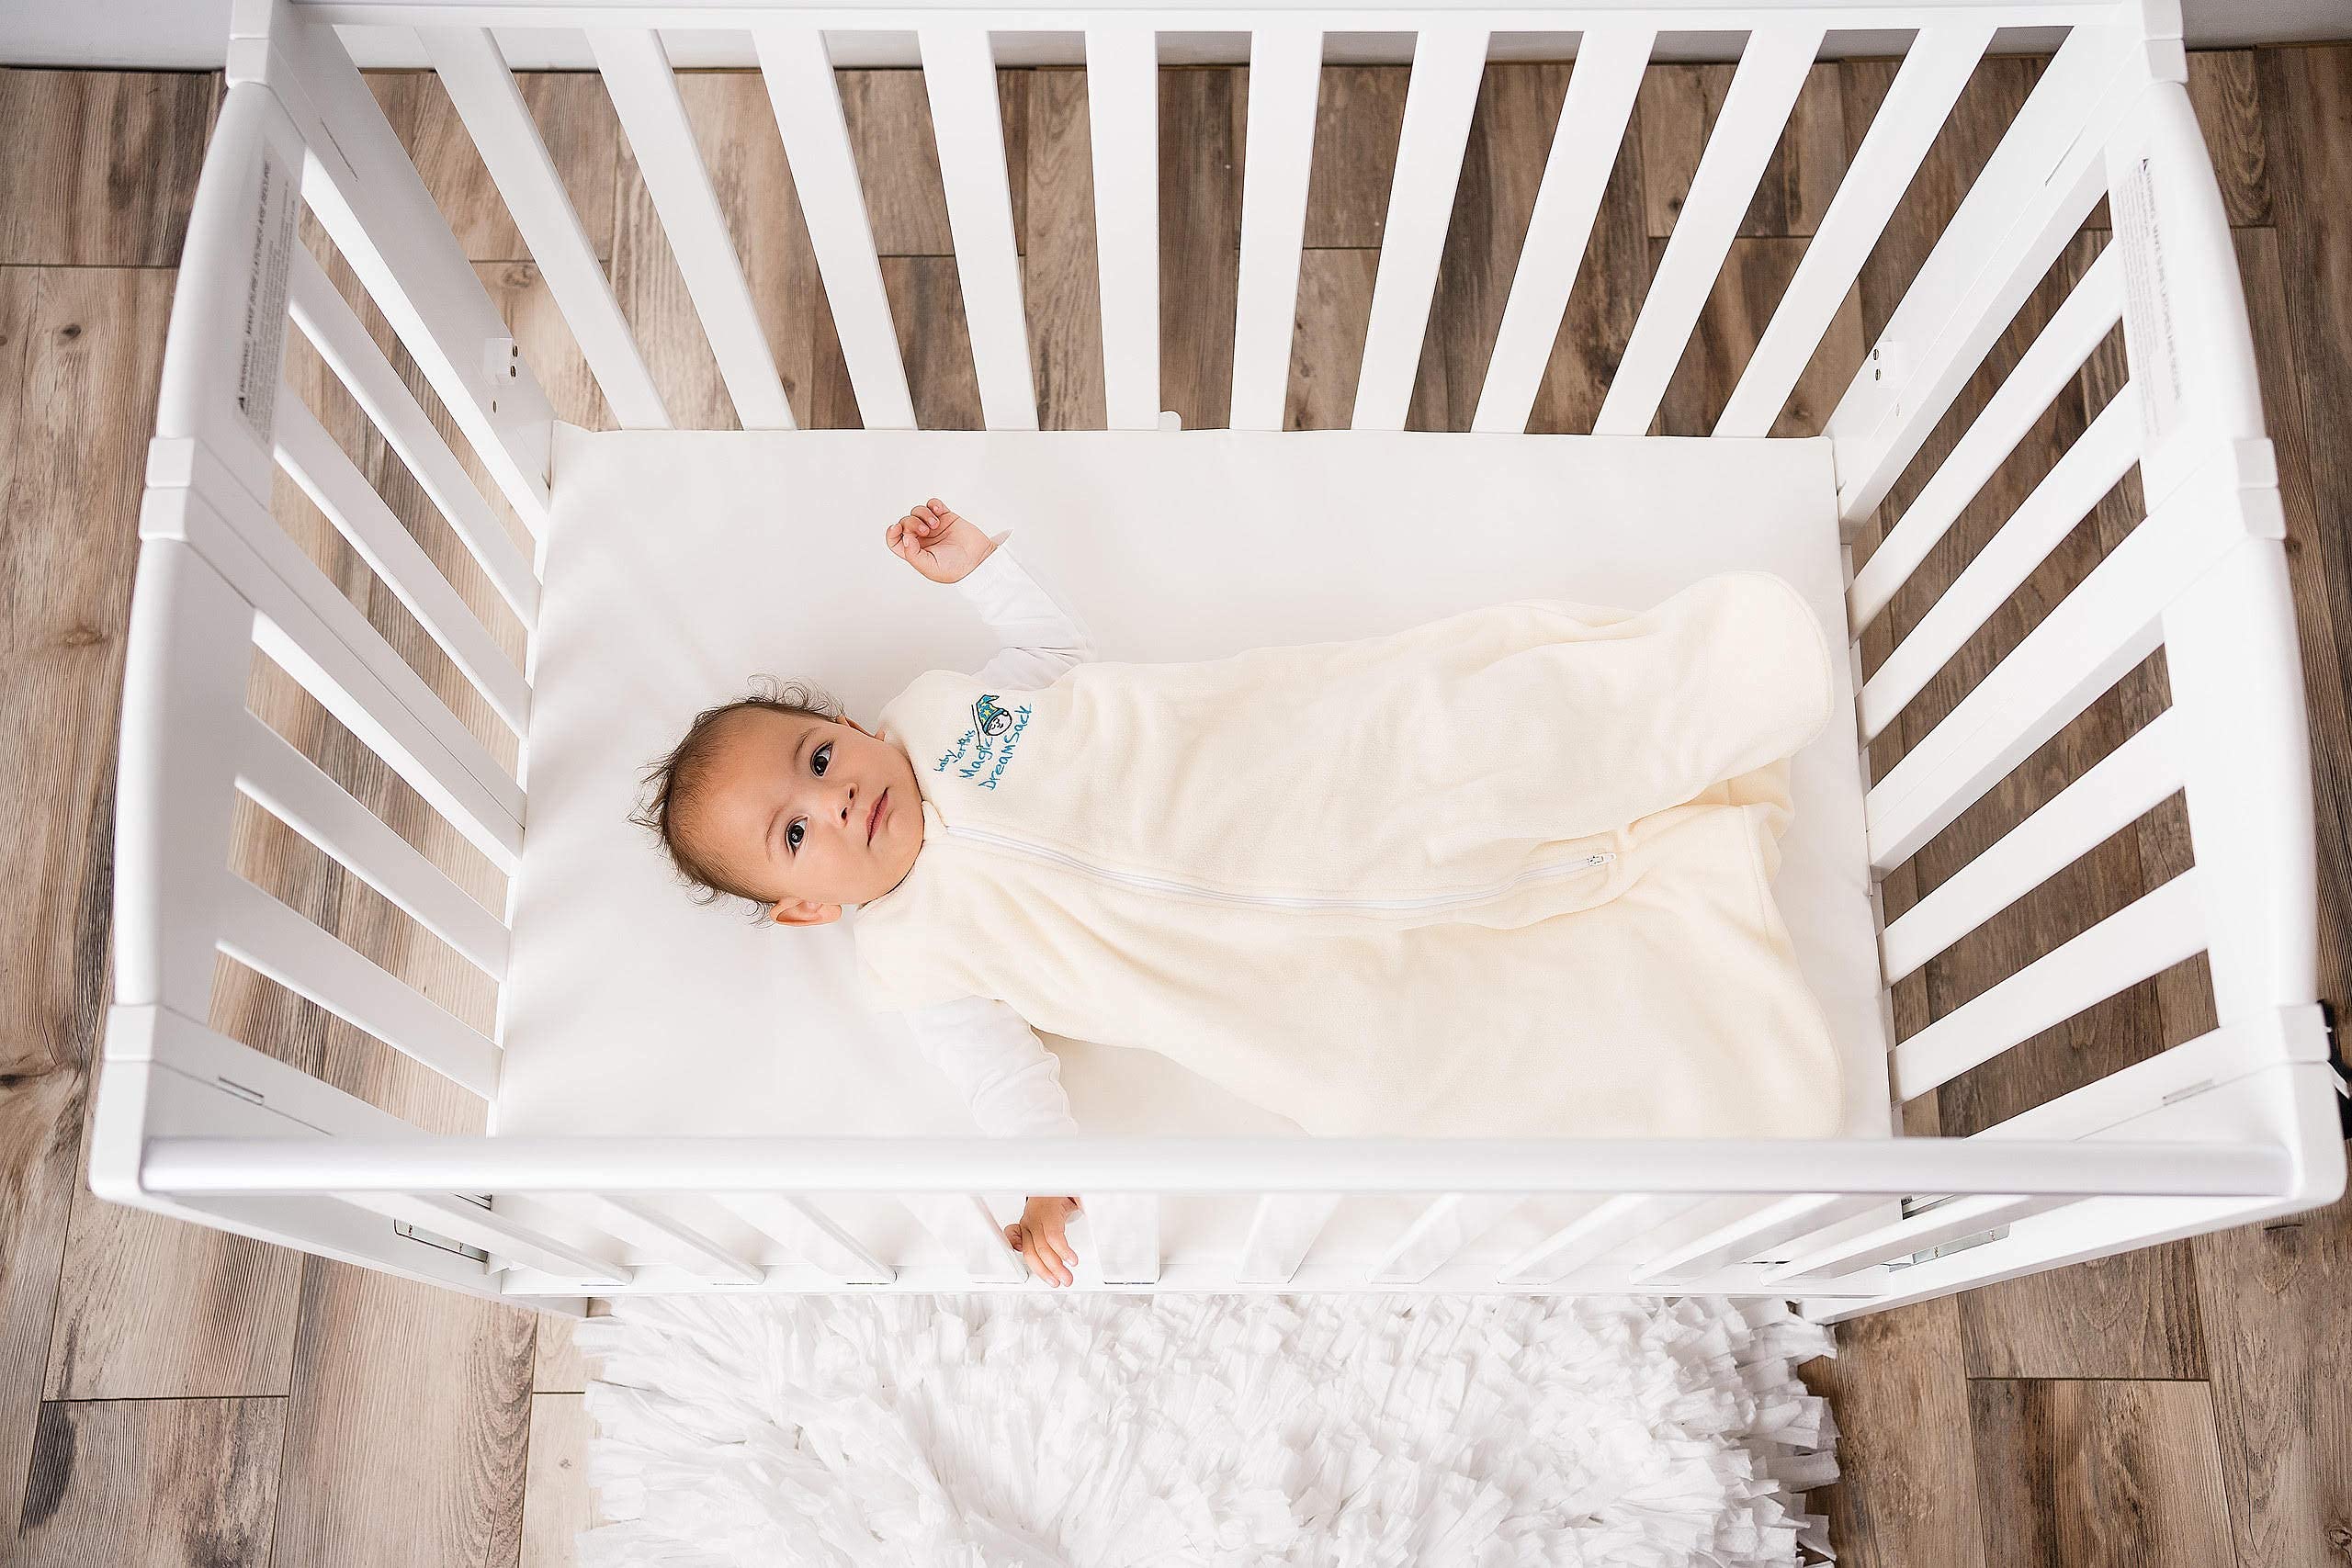 Baby Merlin's Magic Dream Sack - Microfleece Baby Wearable Blanket - Baby Merlin Sleep Sack - Cream - Baby Sleep Sack 6-12 Months